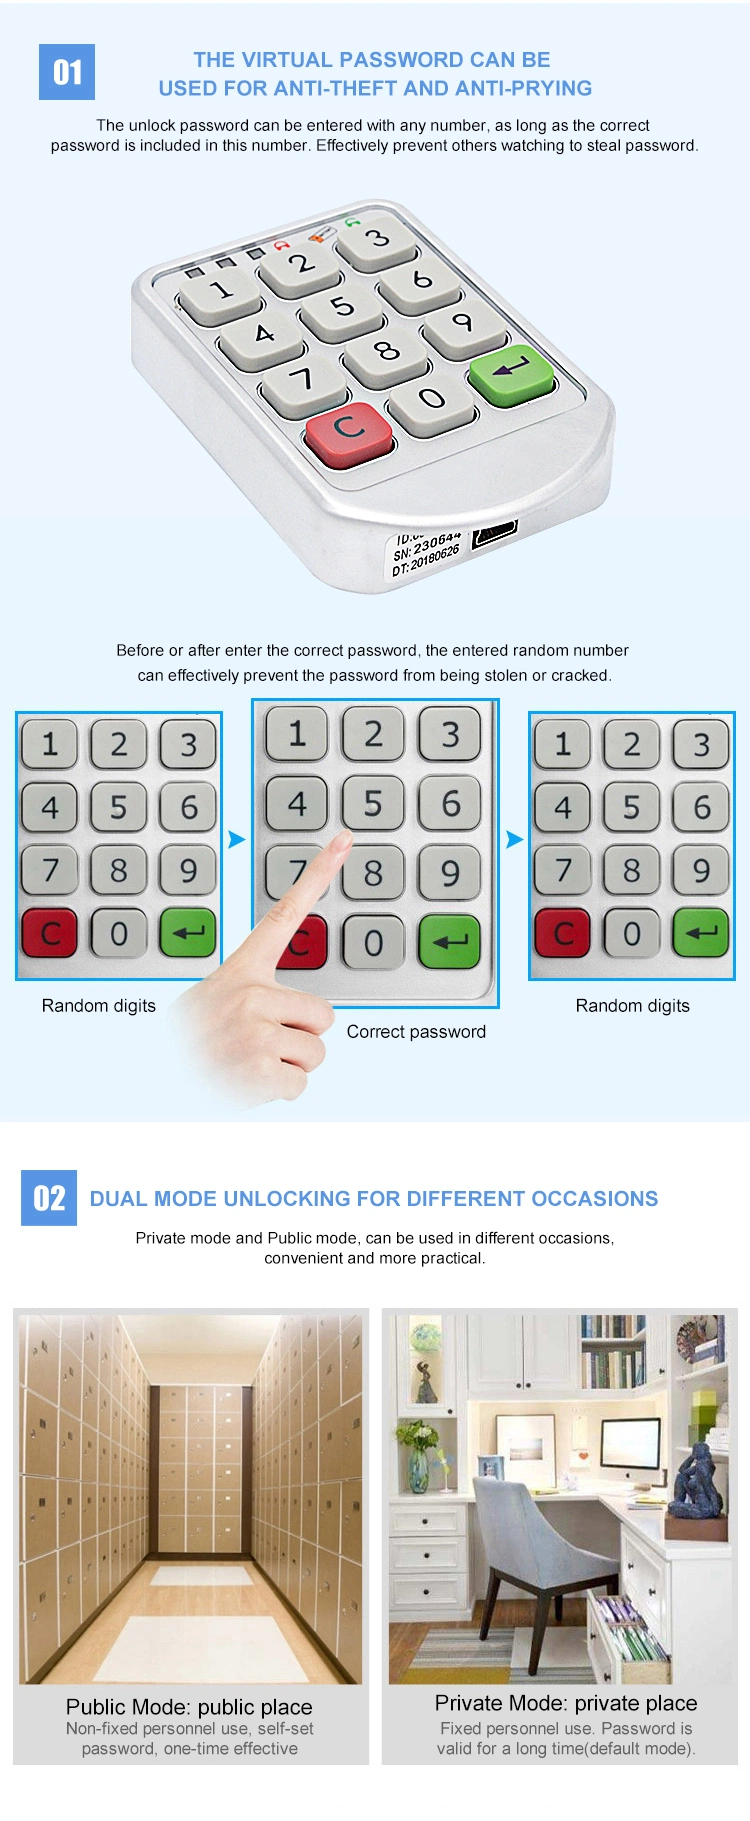 Safety Keyless RFID Card Digital Electric Smart Cabinet Lock